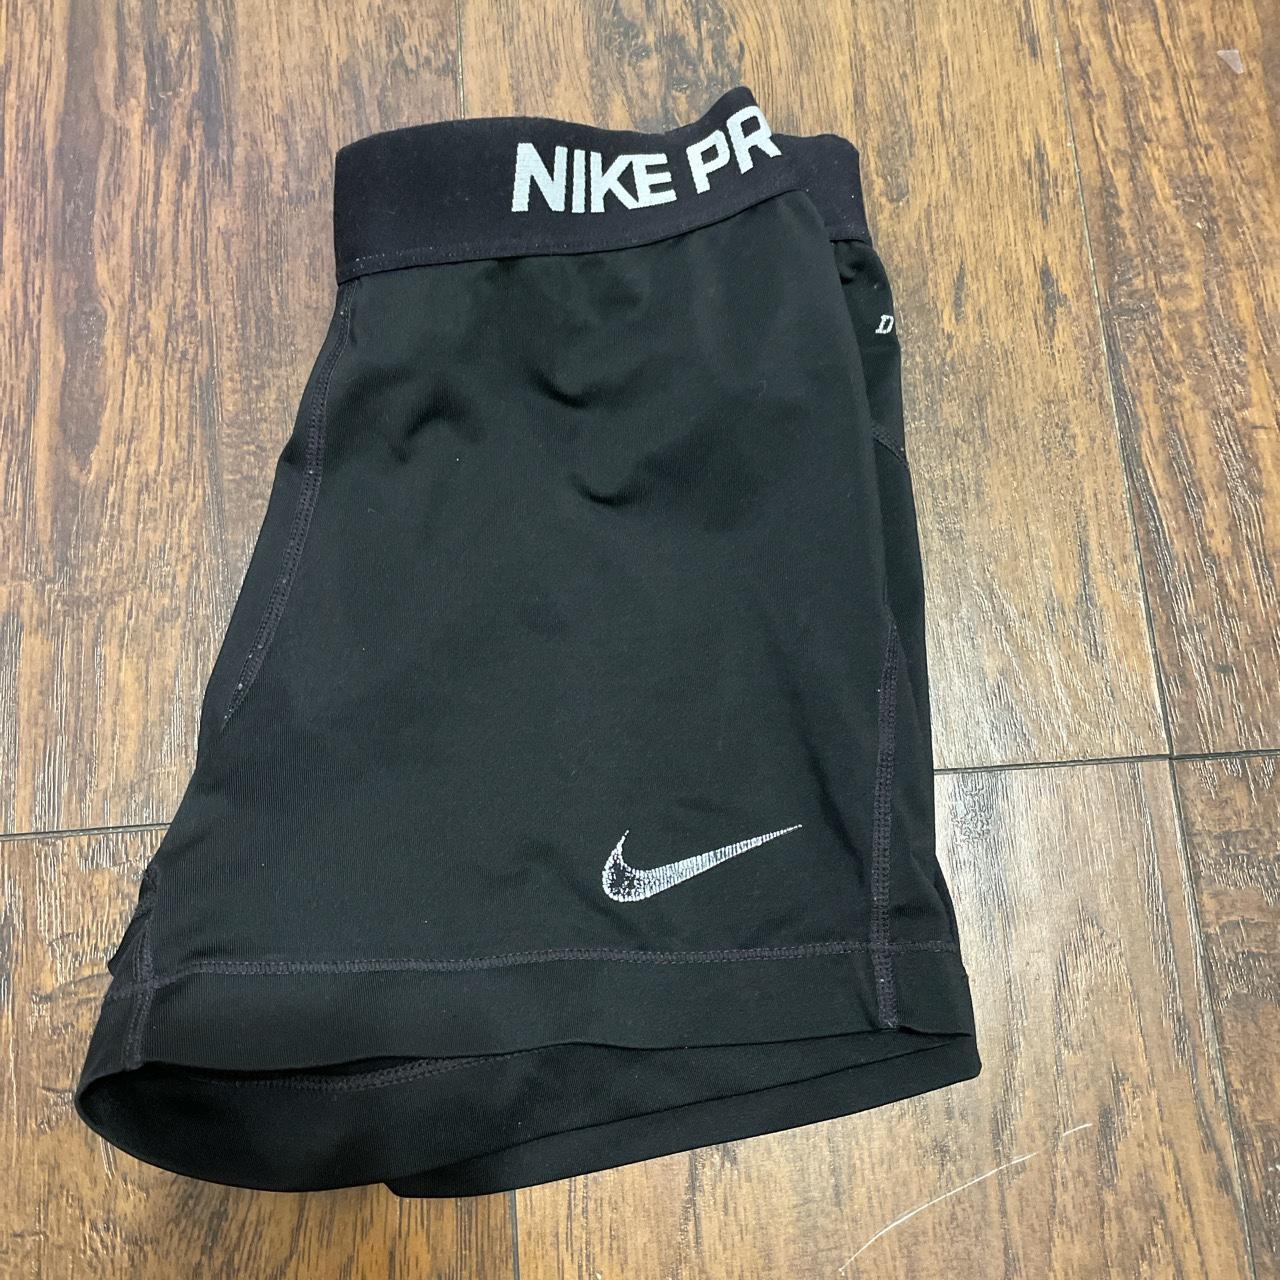 Nike Pro shorts - Depop